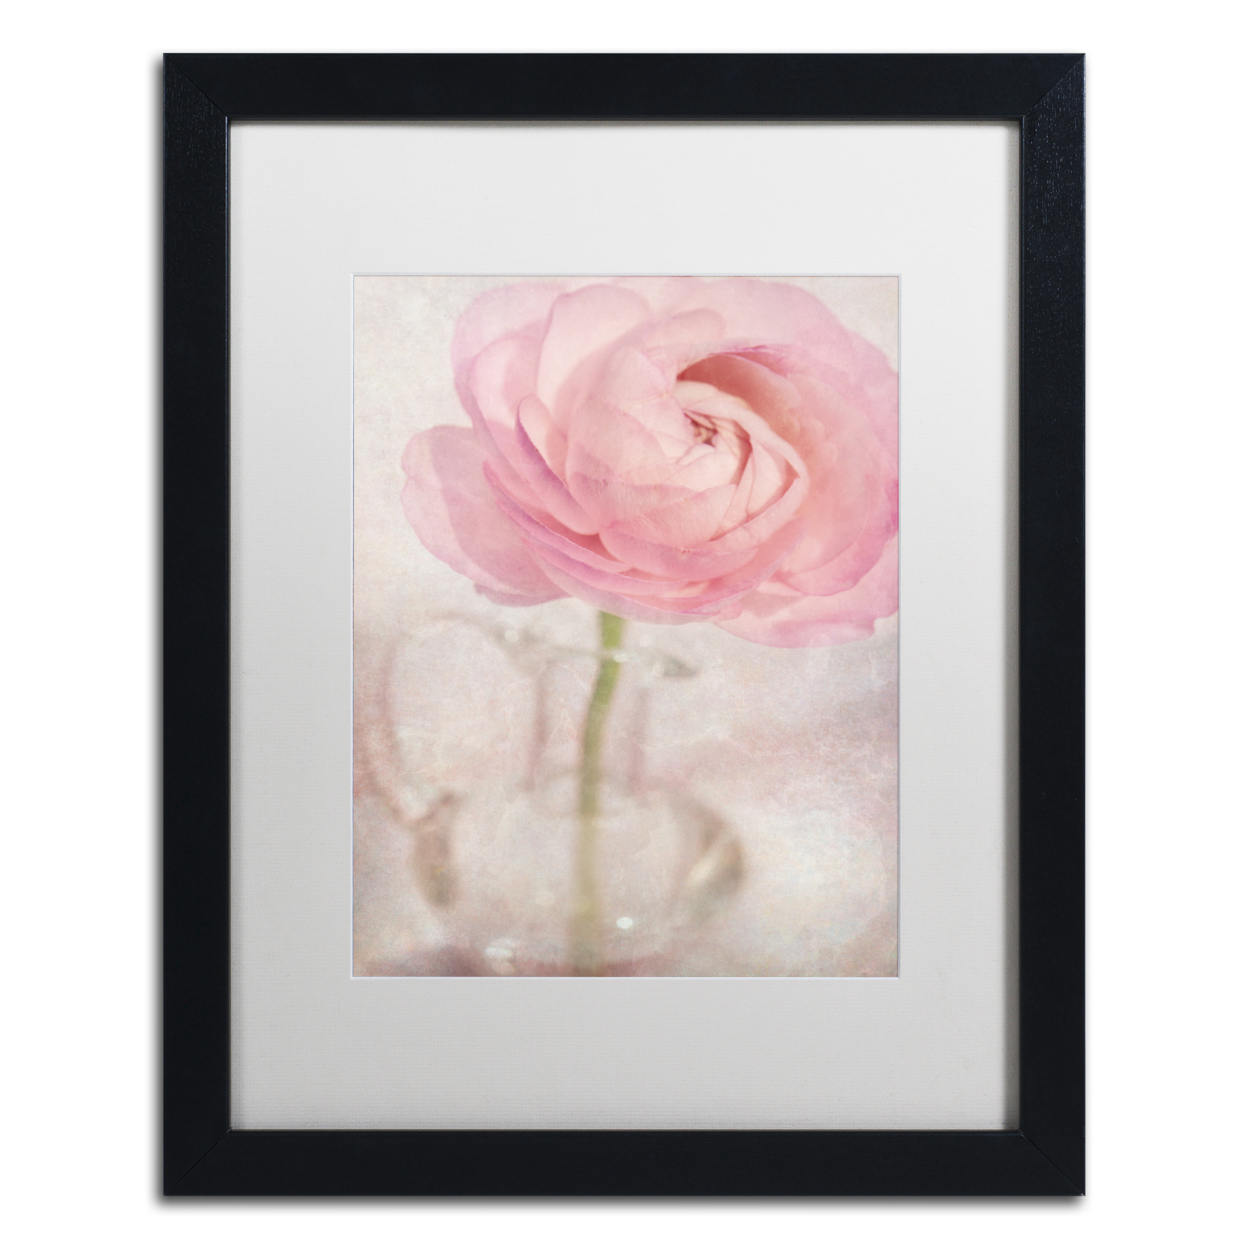 Cora Niele 'Single Rose Pink Flower' Black Wooden Framed Art 18 X 22 Inches